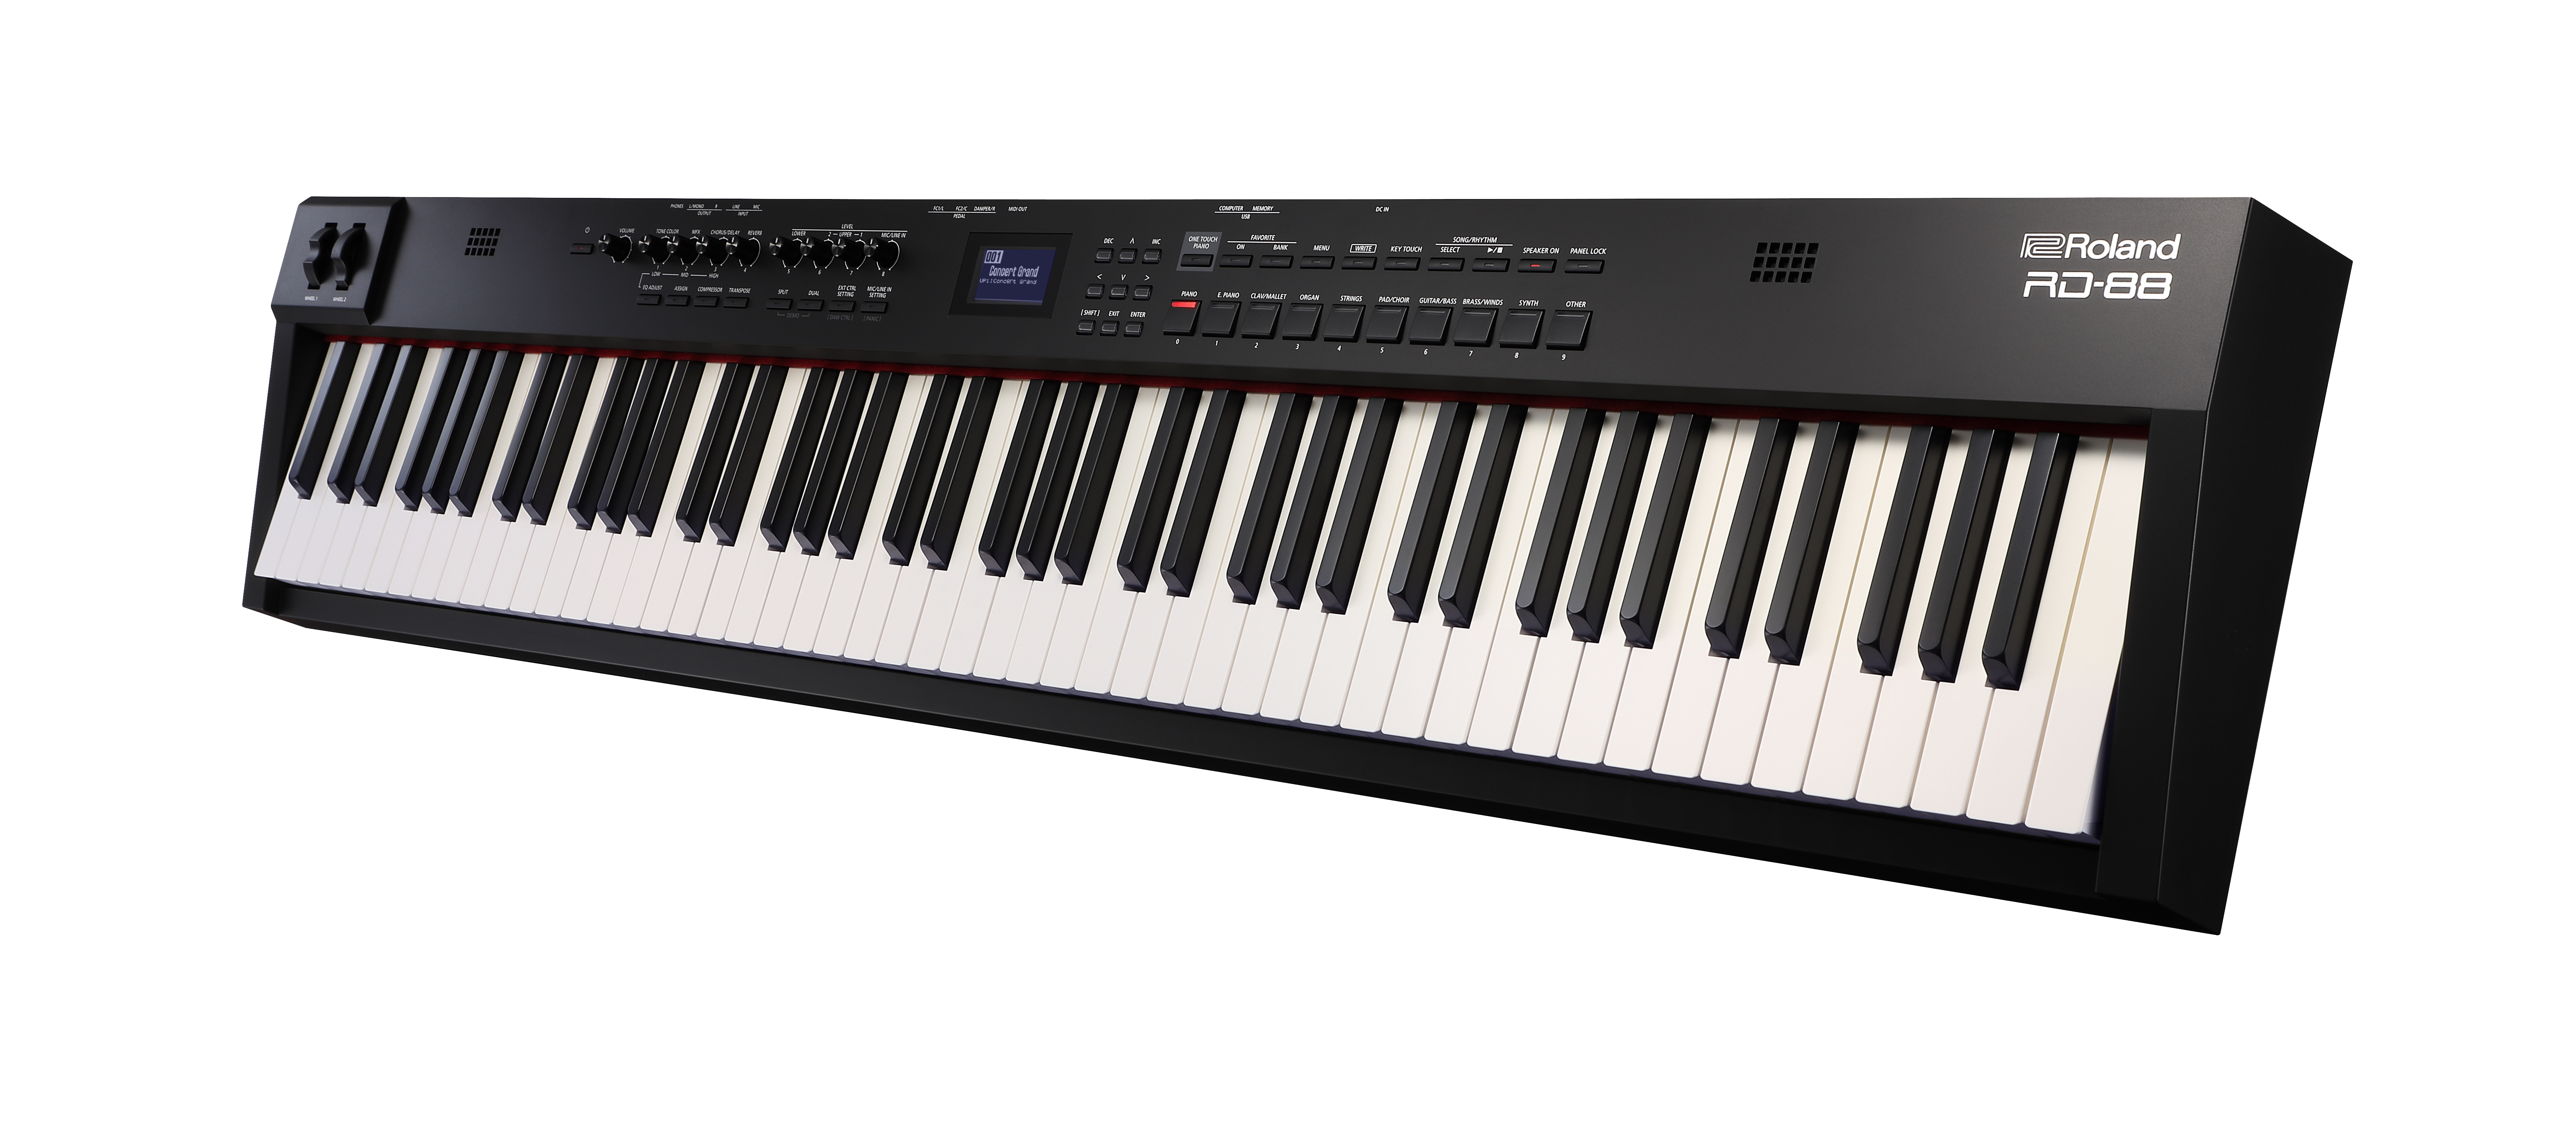 Roland】ステージピアノRDシリーズにスリムな最新機種「RD-88」登場 